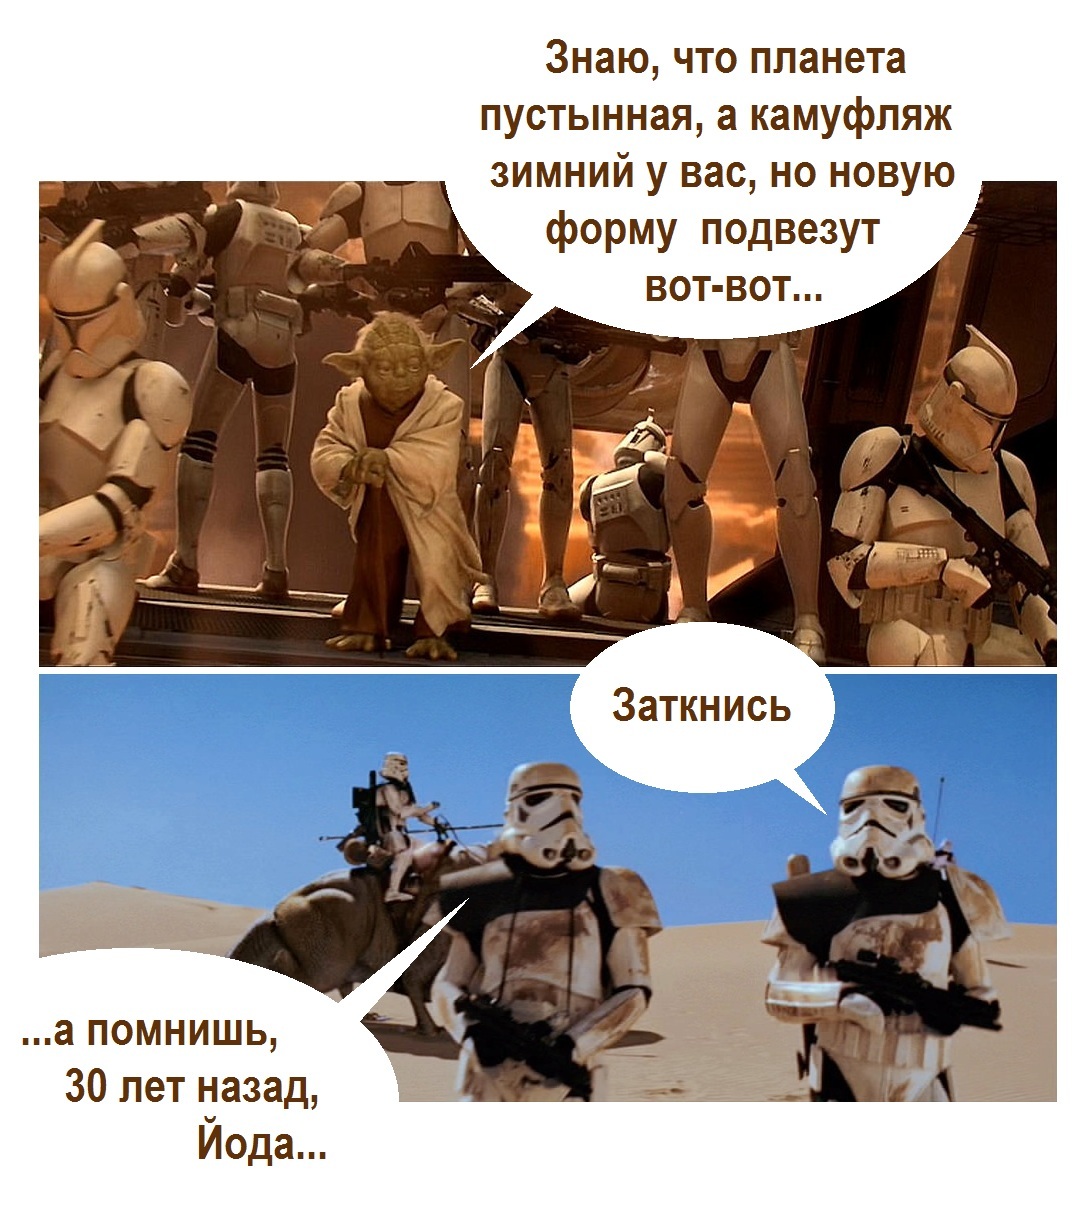 That's how it was... - Star Wars, Star Wars stormtrooper, Yoda, Comics